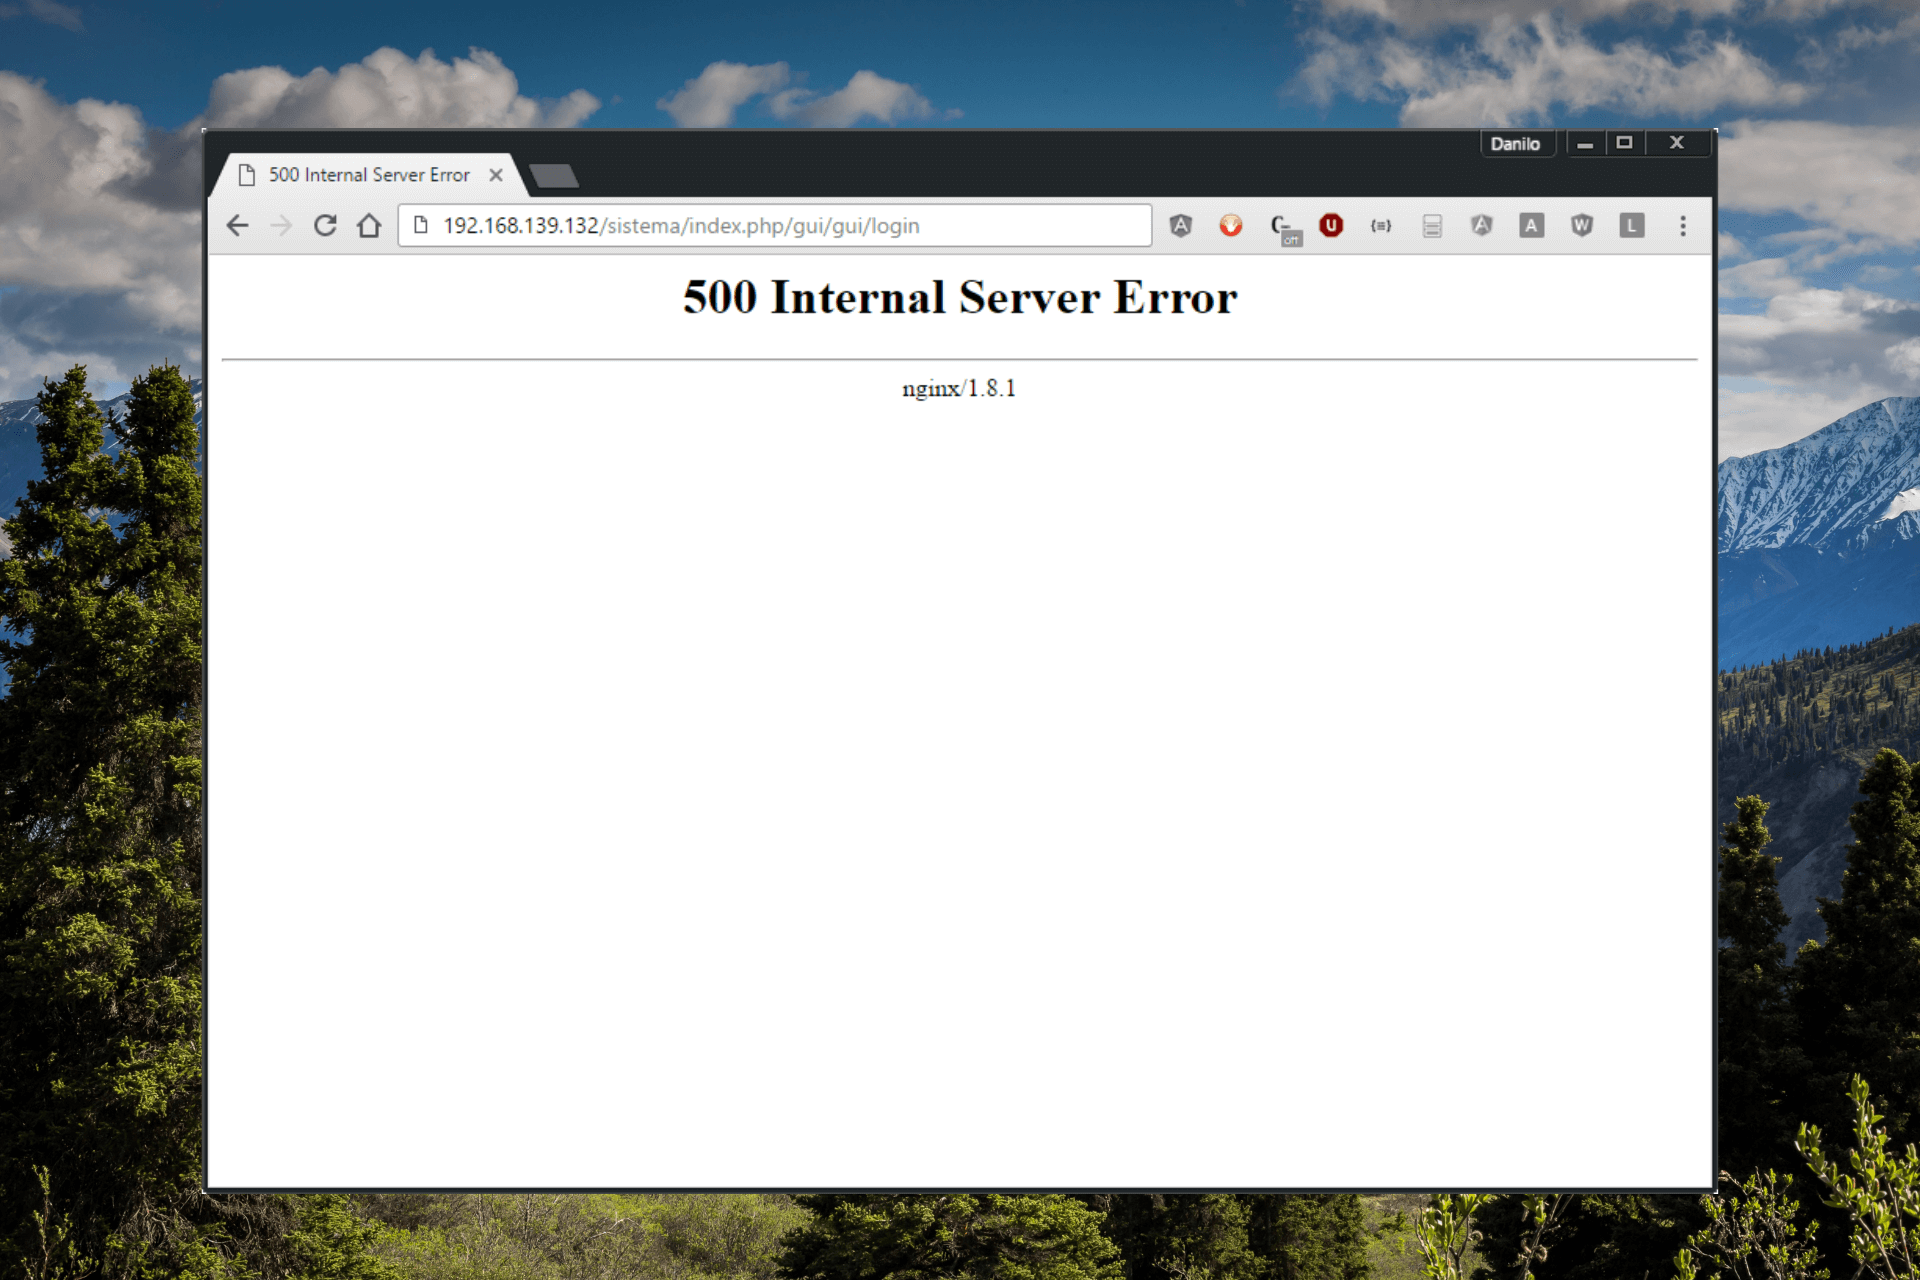 Tumbex internal server error